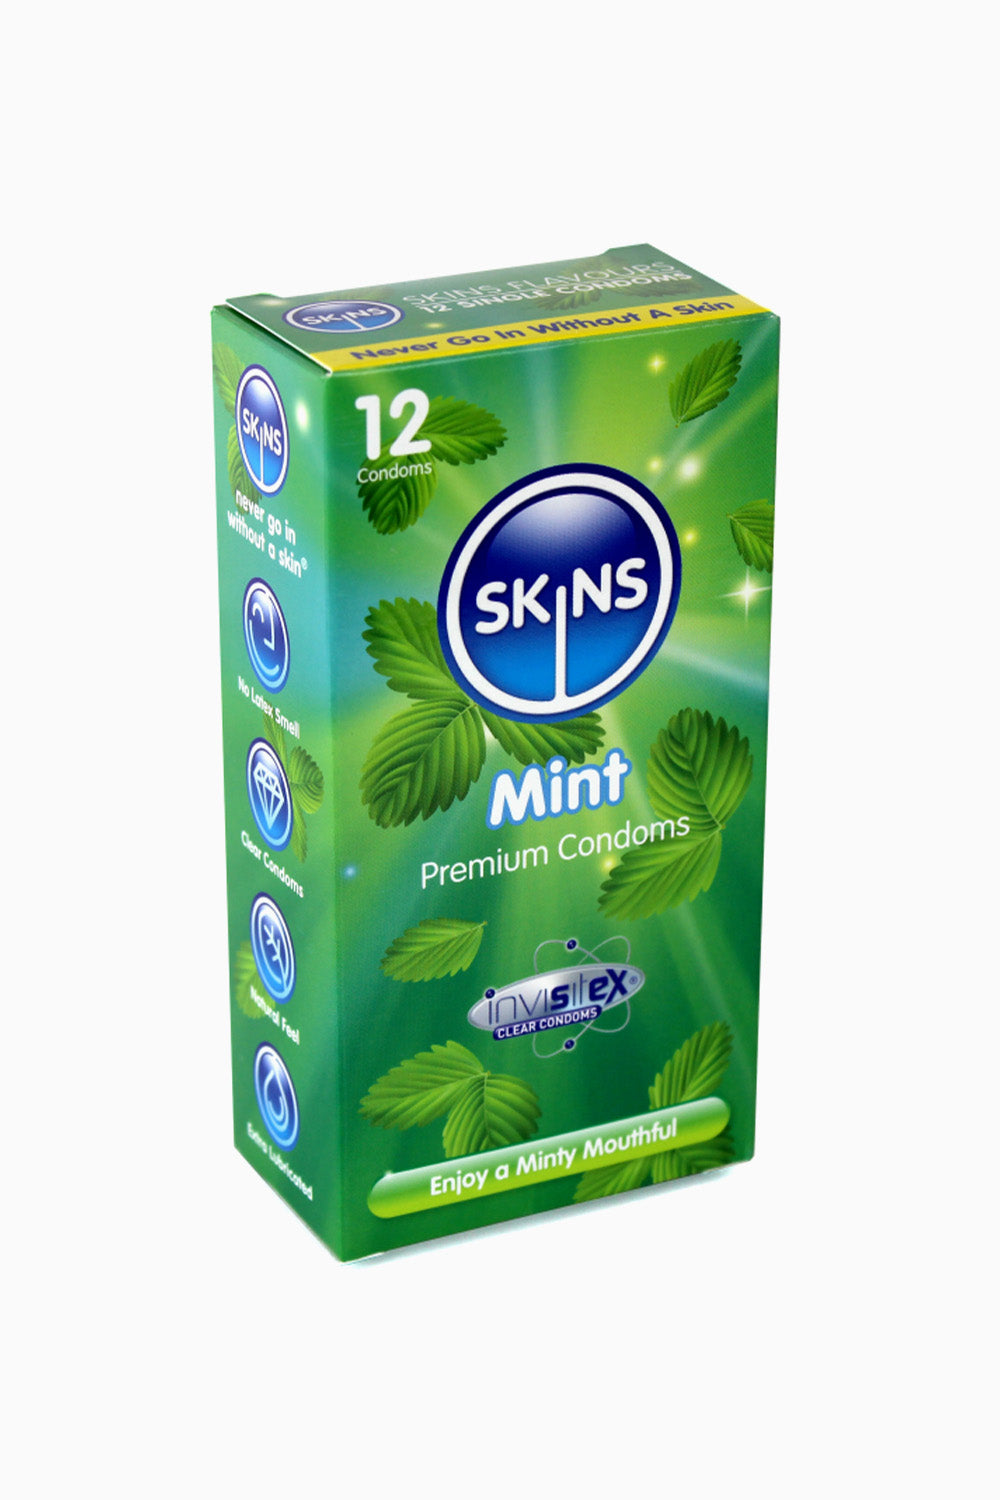 Skins Condoms Mint Flavoured